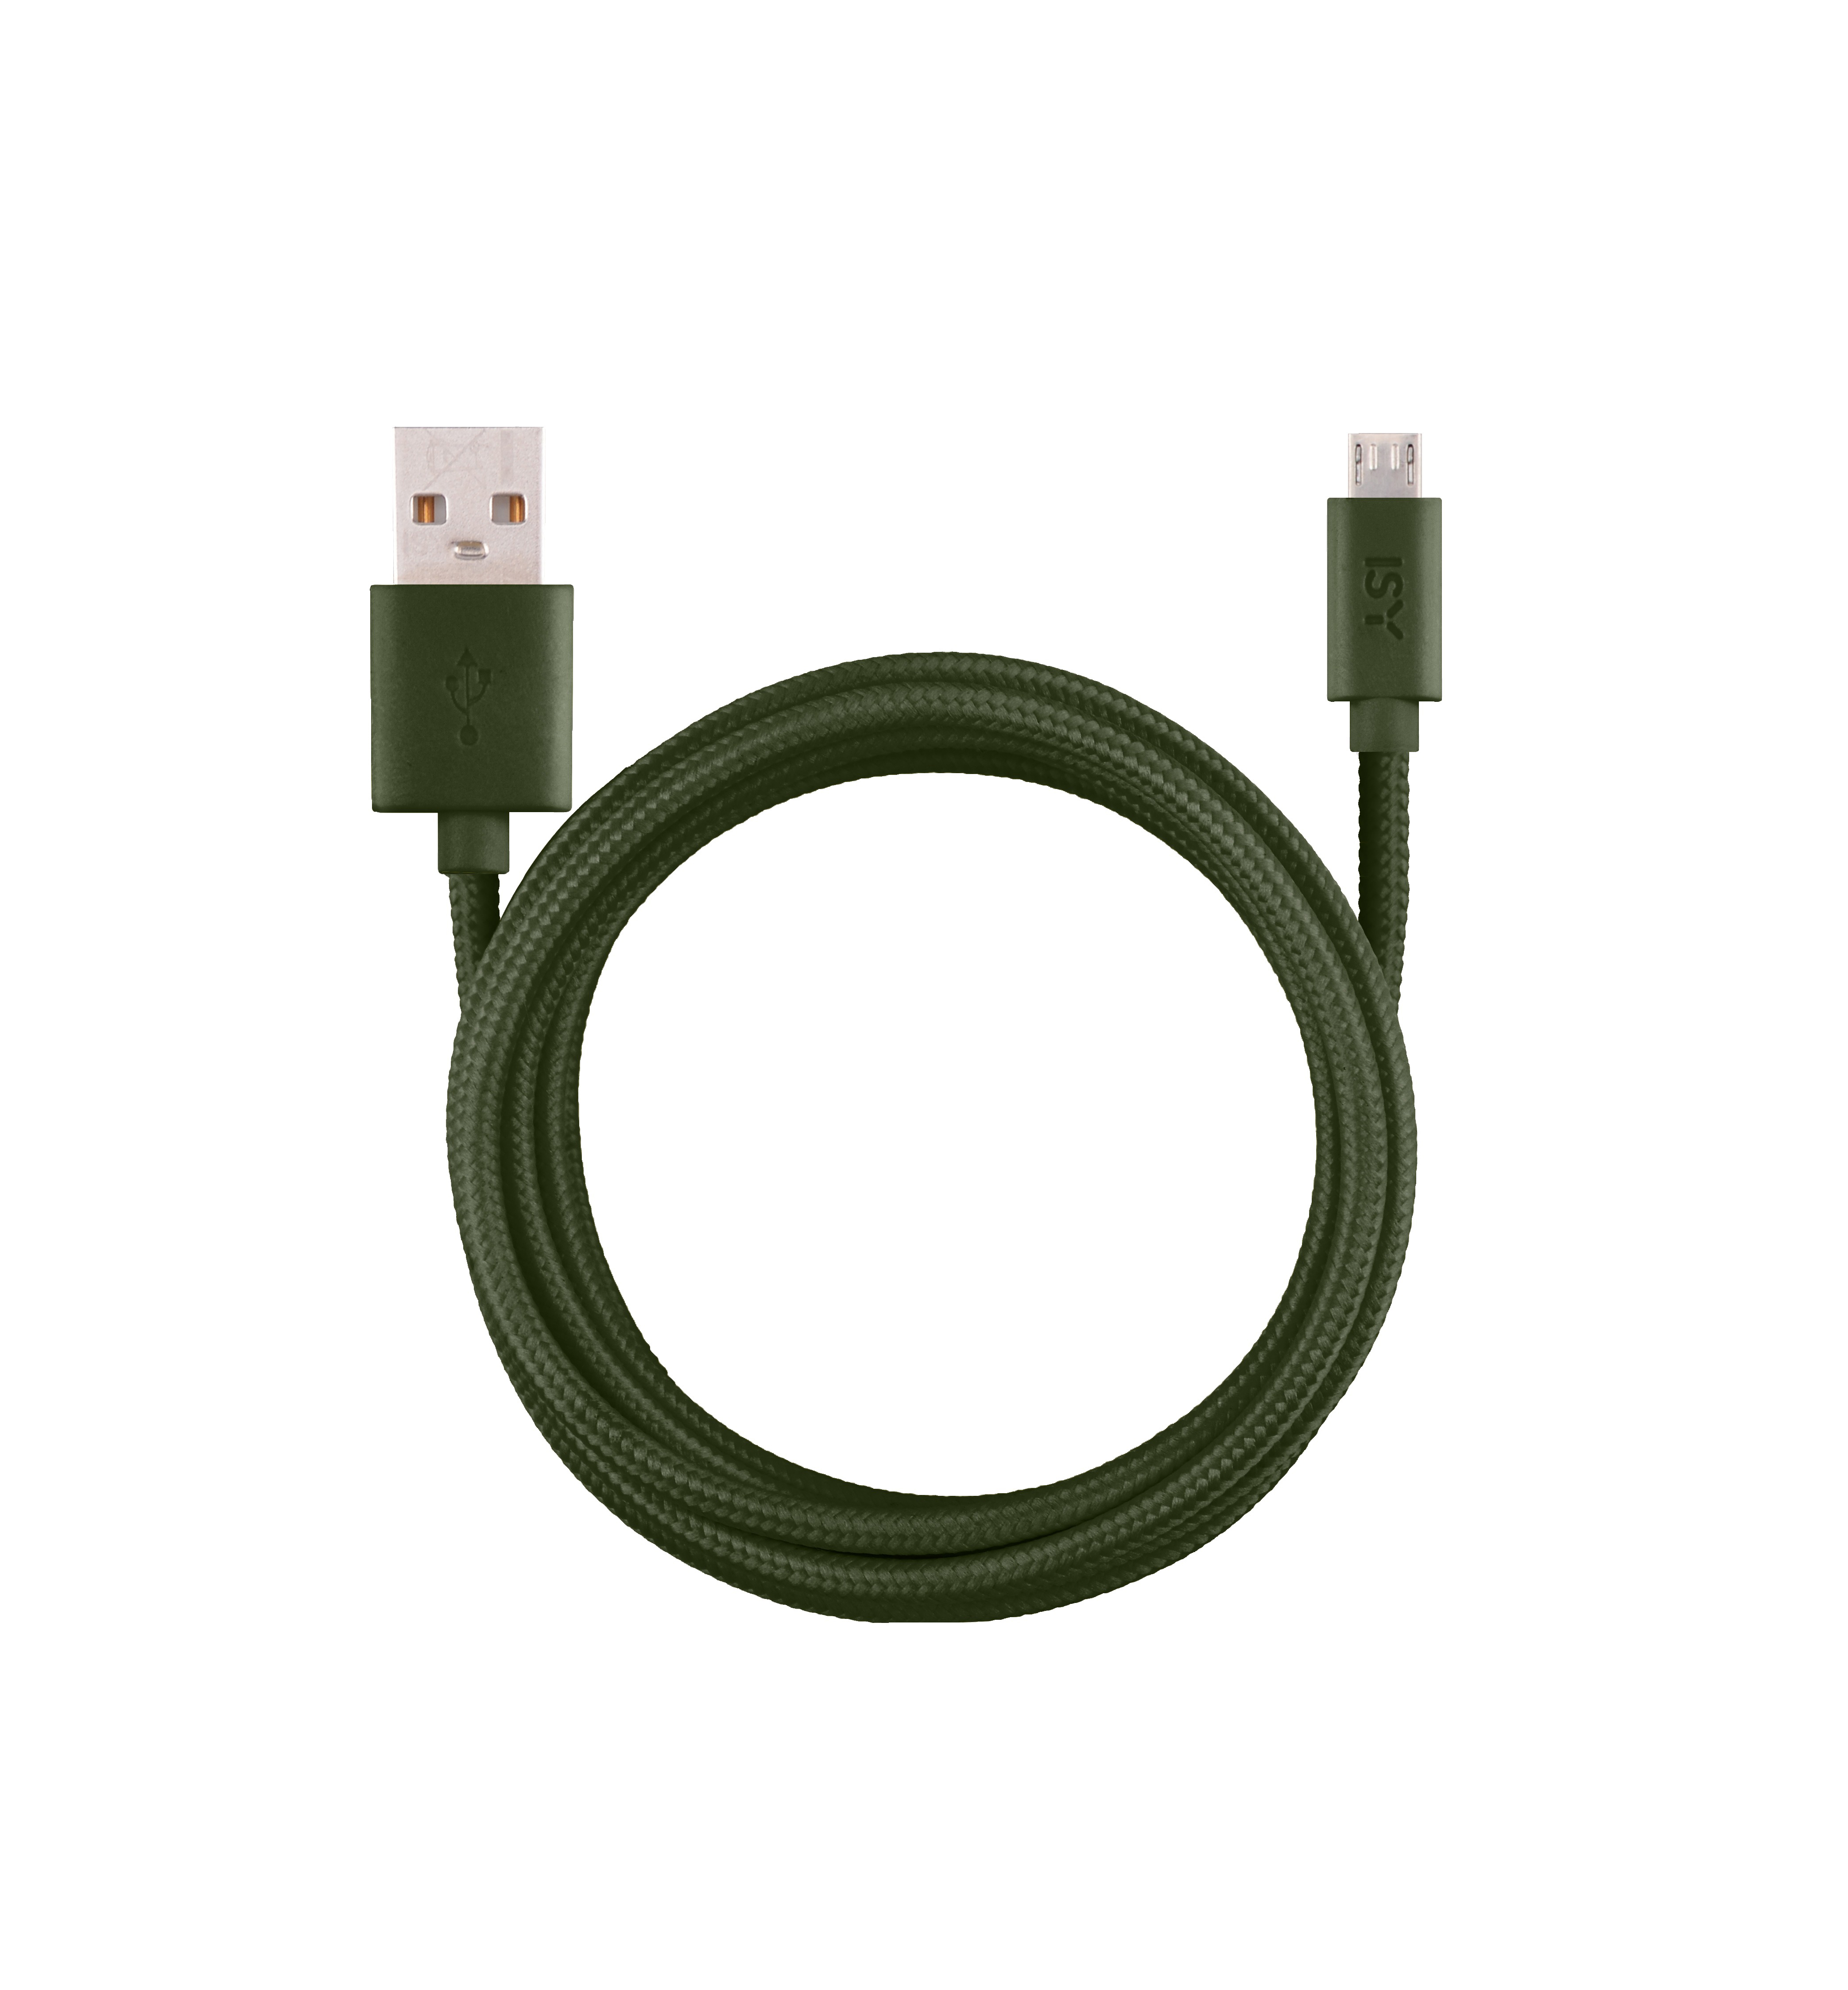 Ladekabel, m, Grün 1,8 ISY Micro-USB IFC-1800-GN-M,